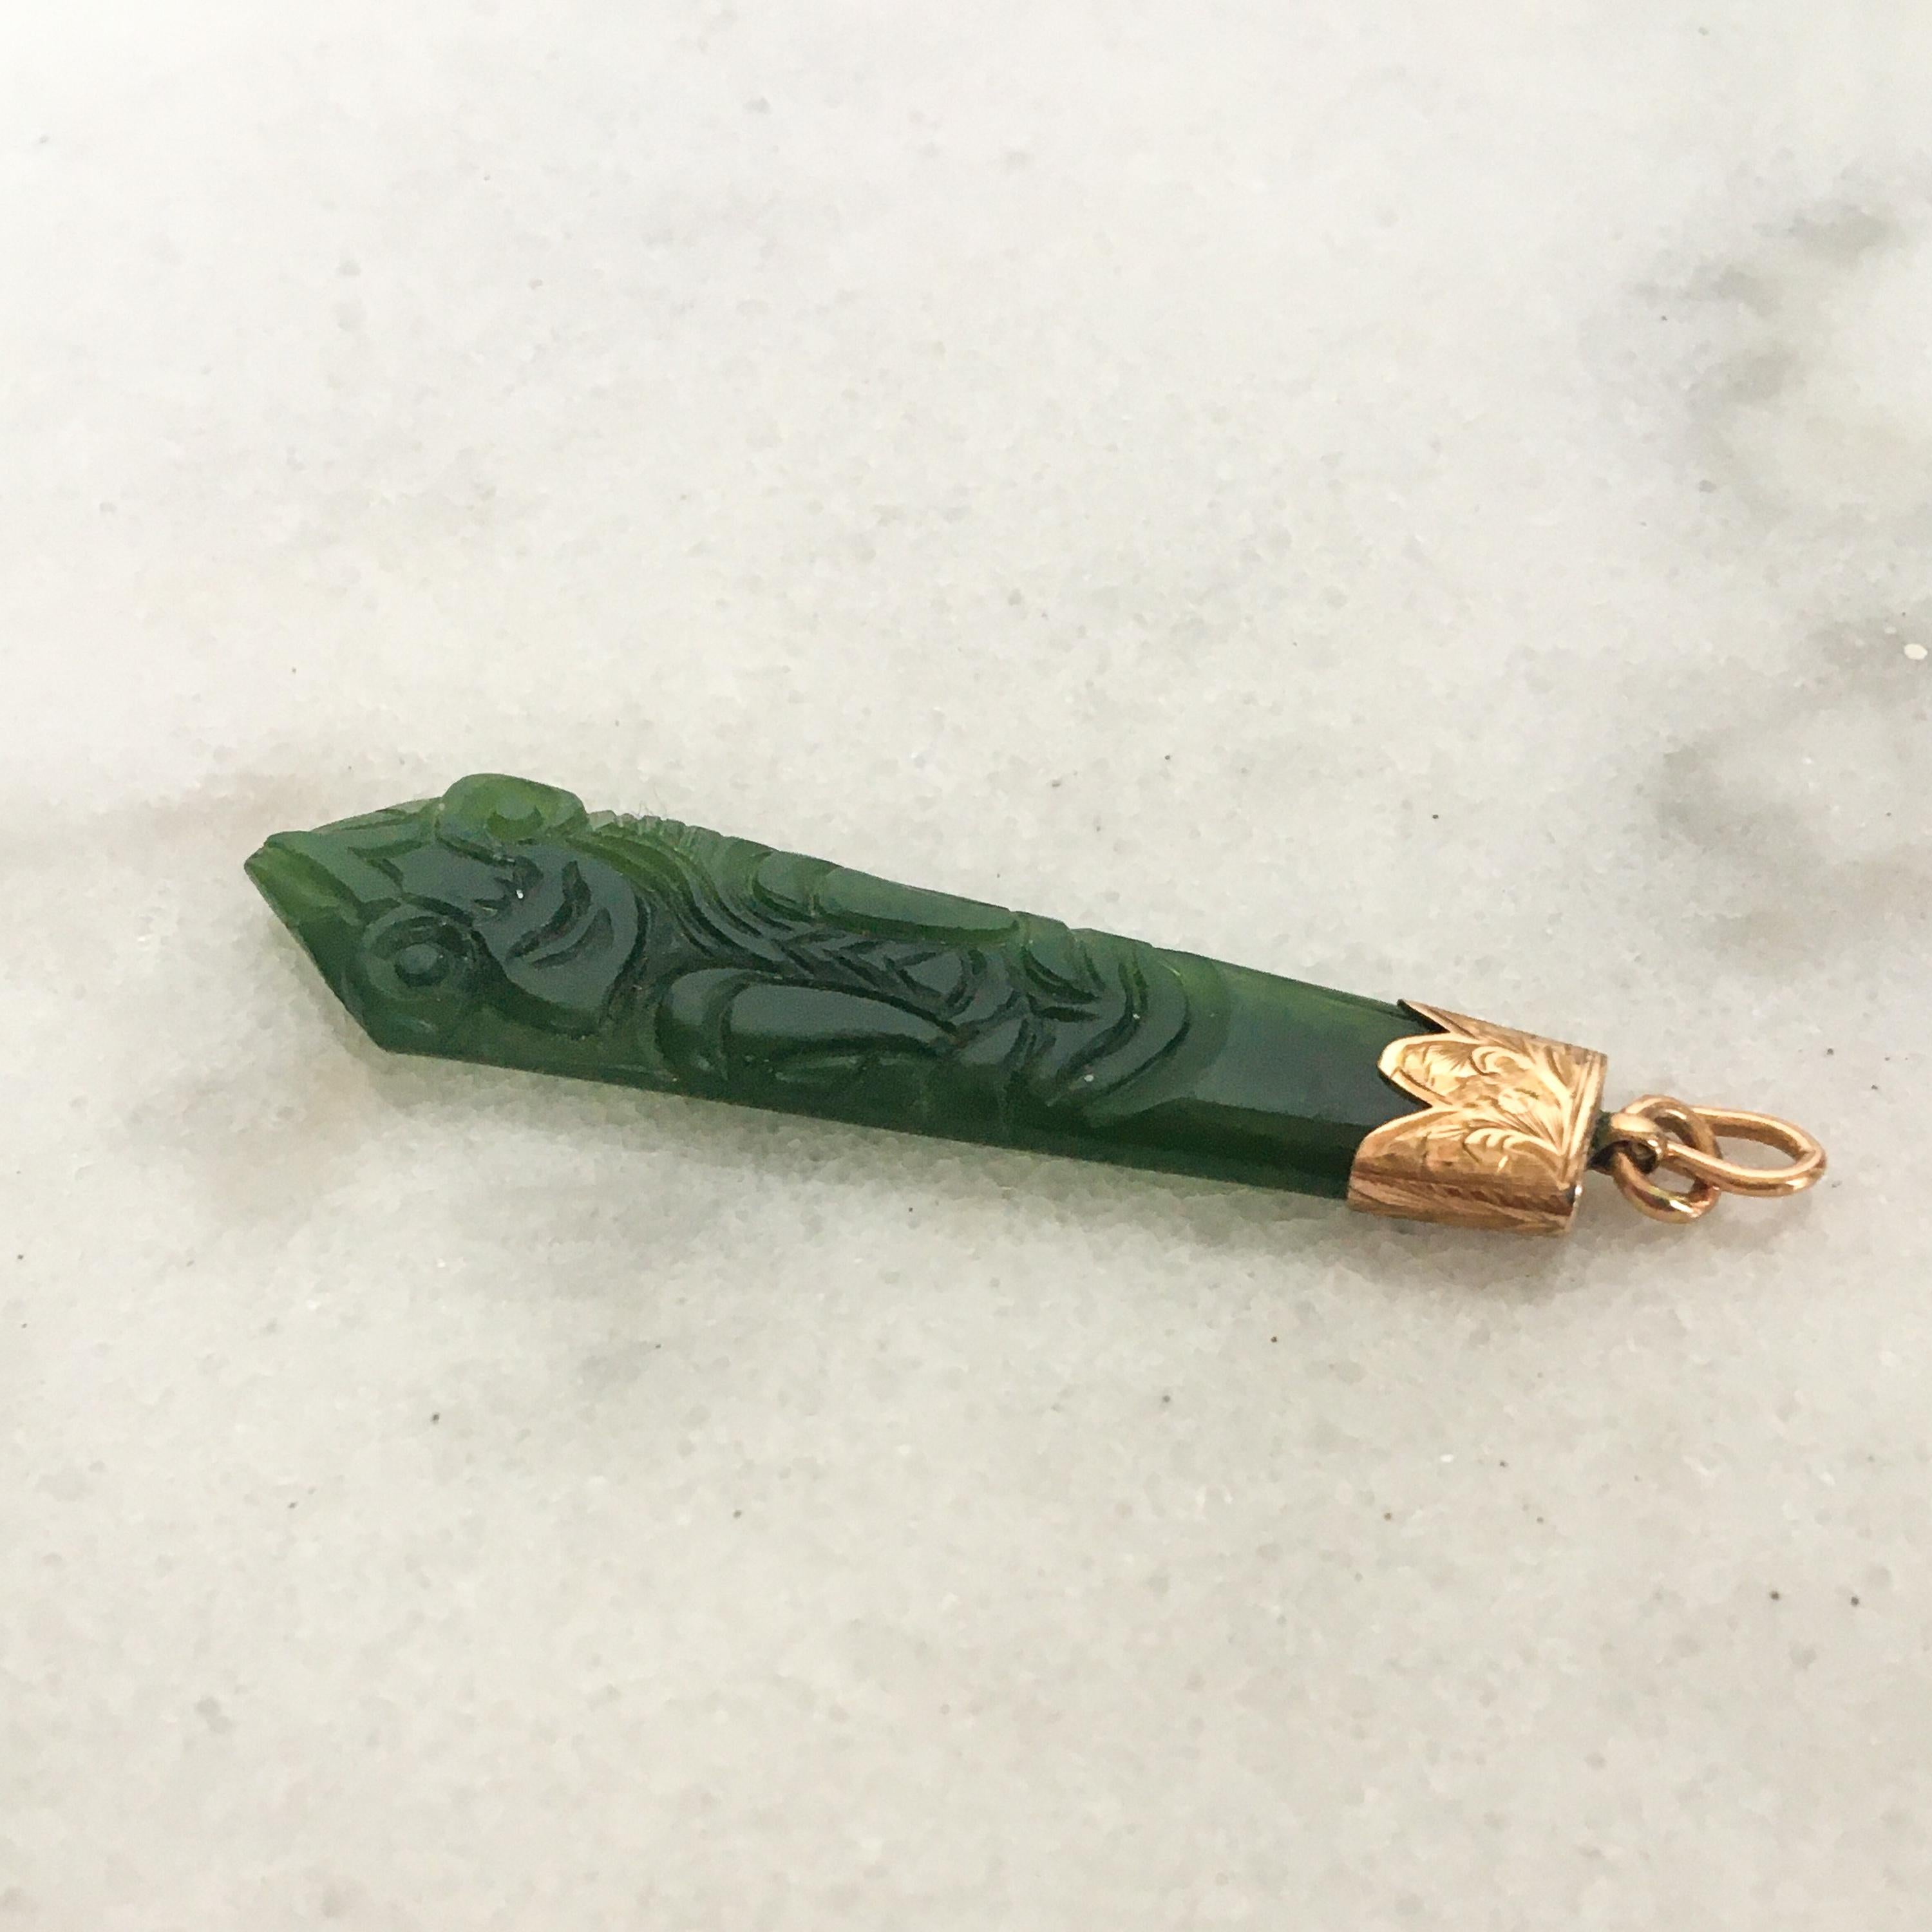 Carved Jade Kite Cut Rose Gold Pendant 4